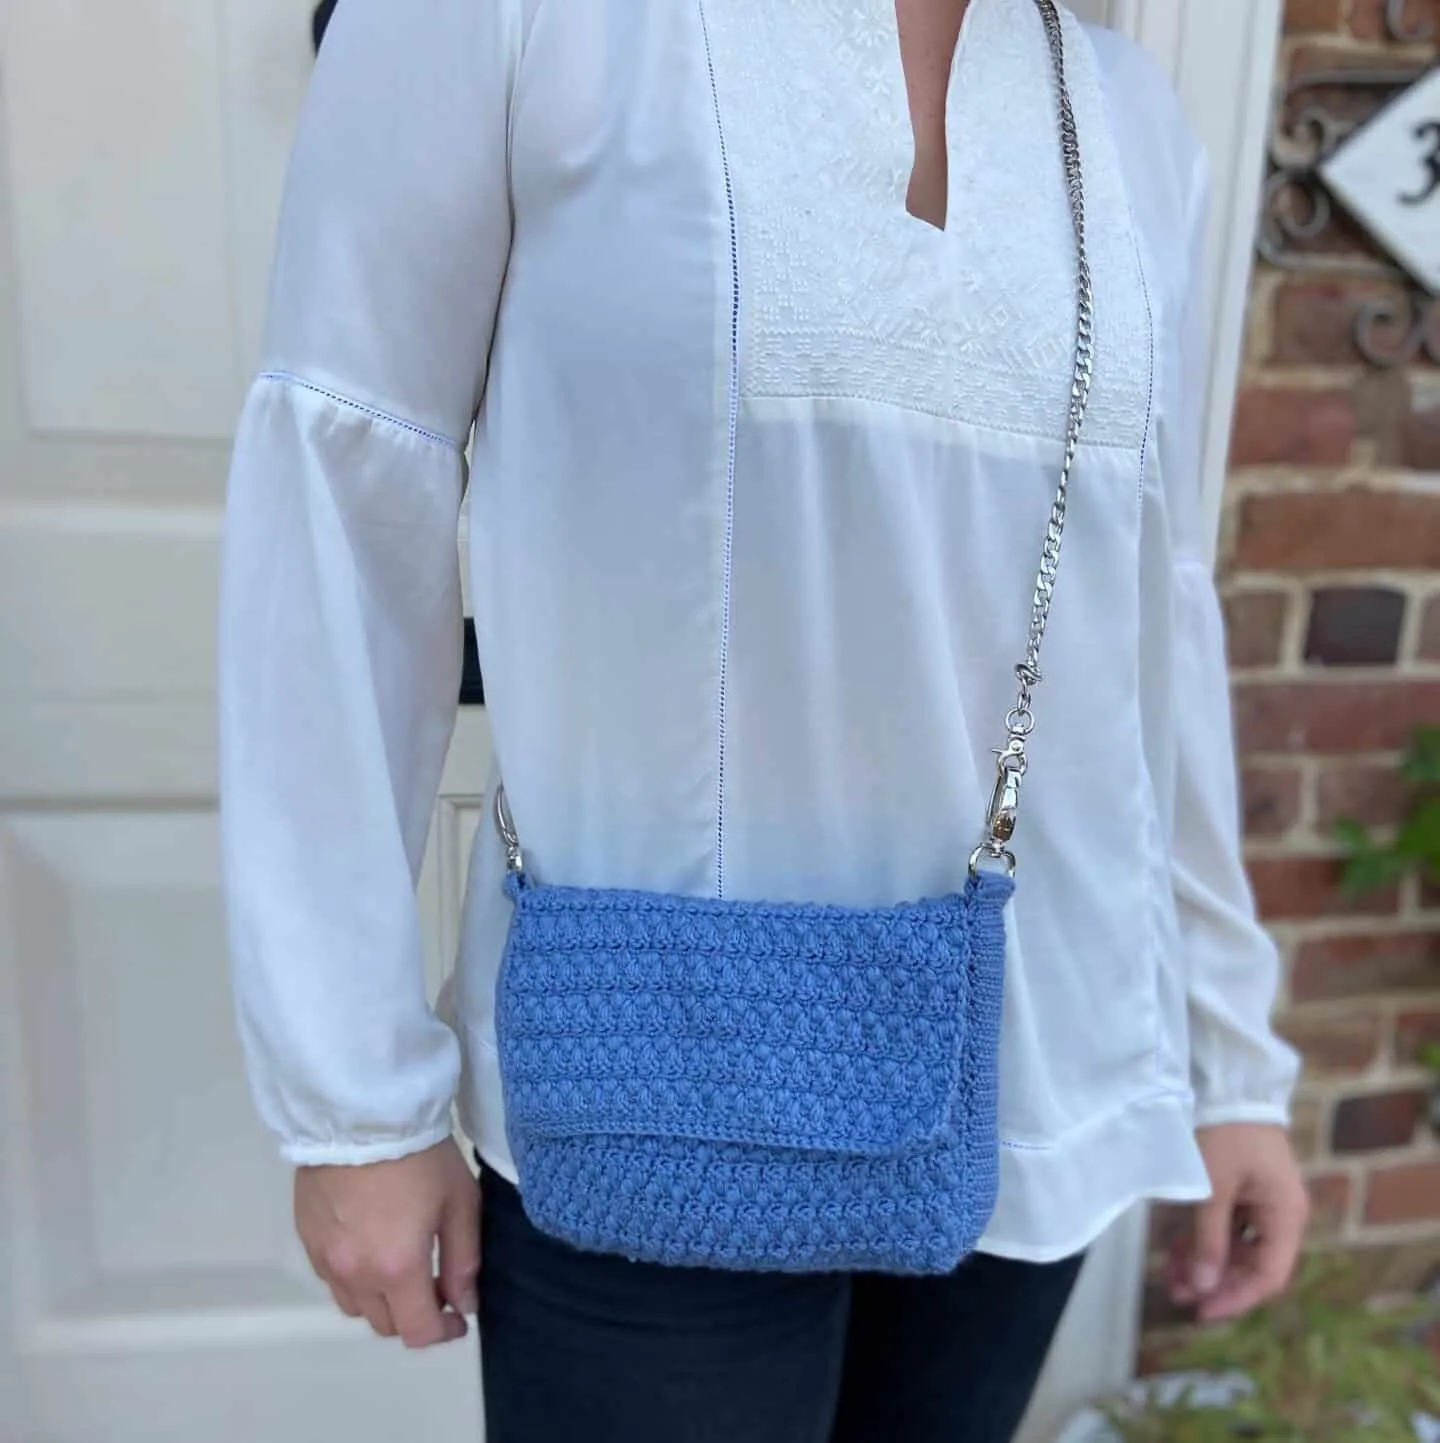 Blue crochet shoulder bag on woman in white shirt.